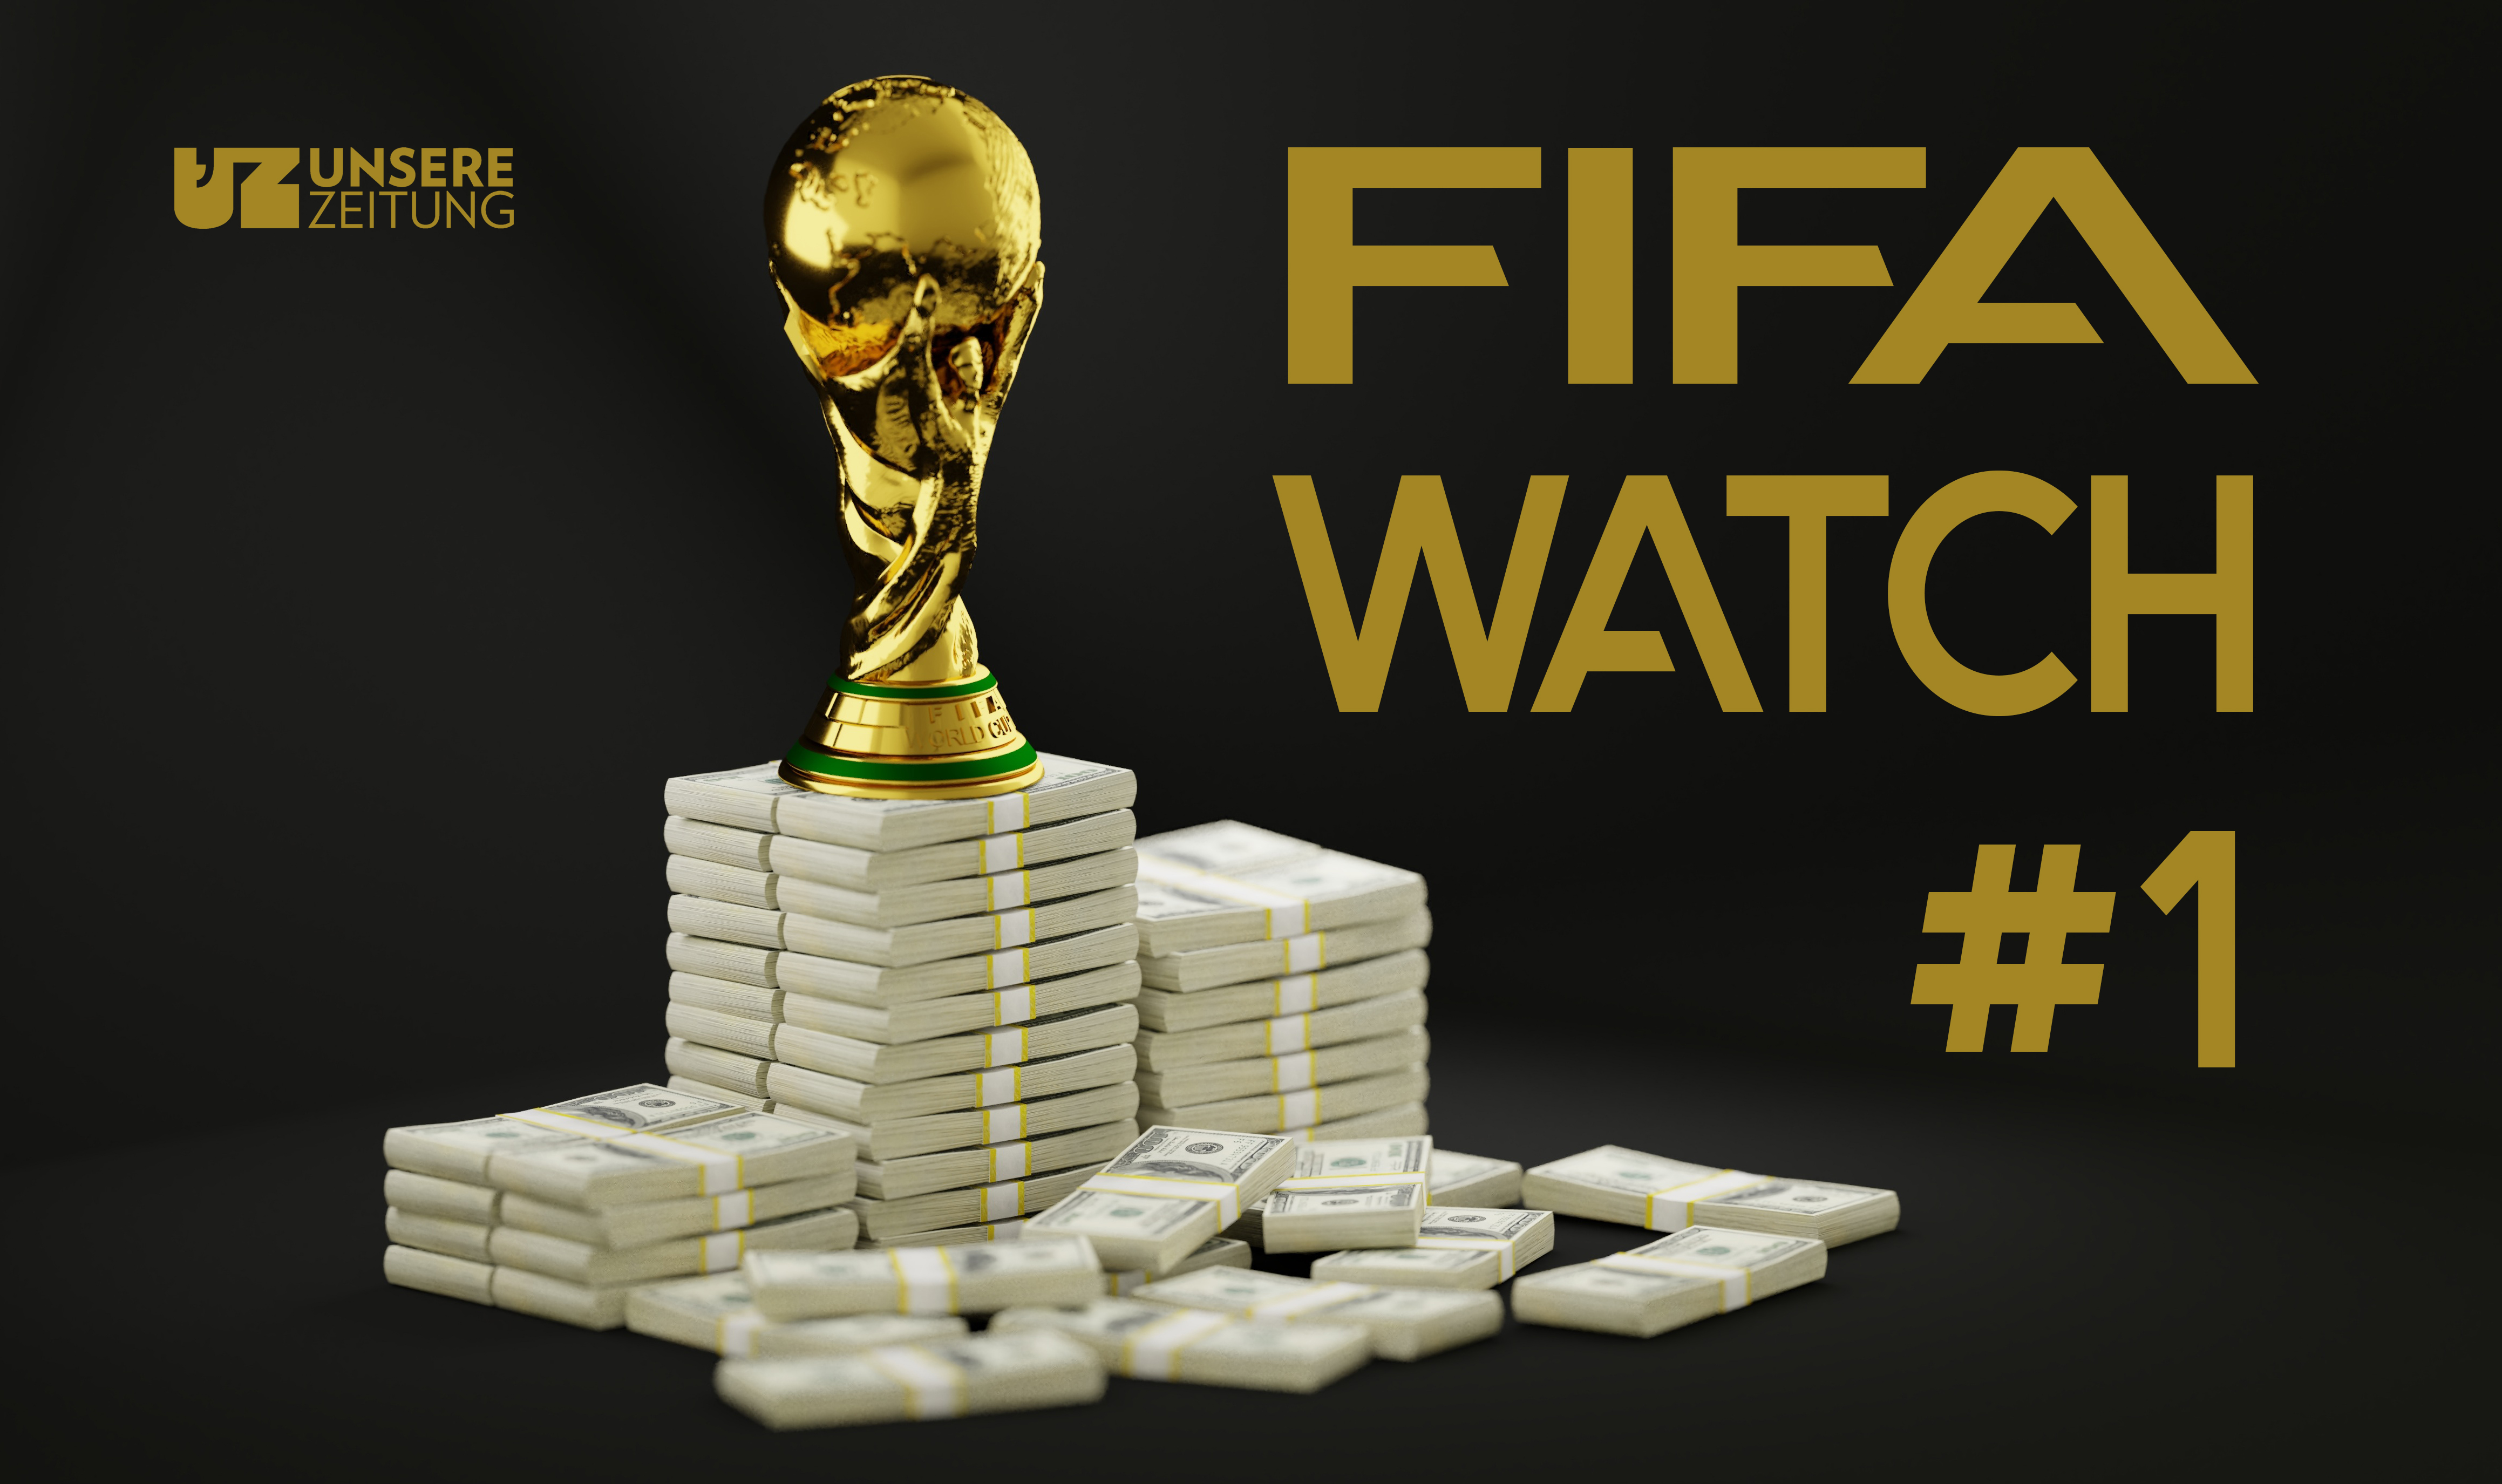 FIFA WATCH #1